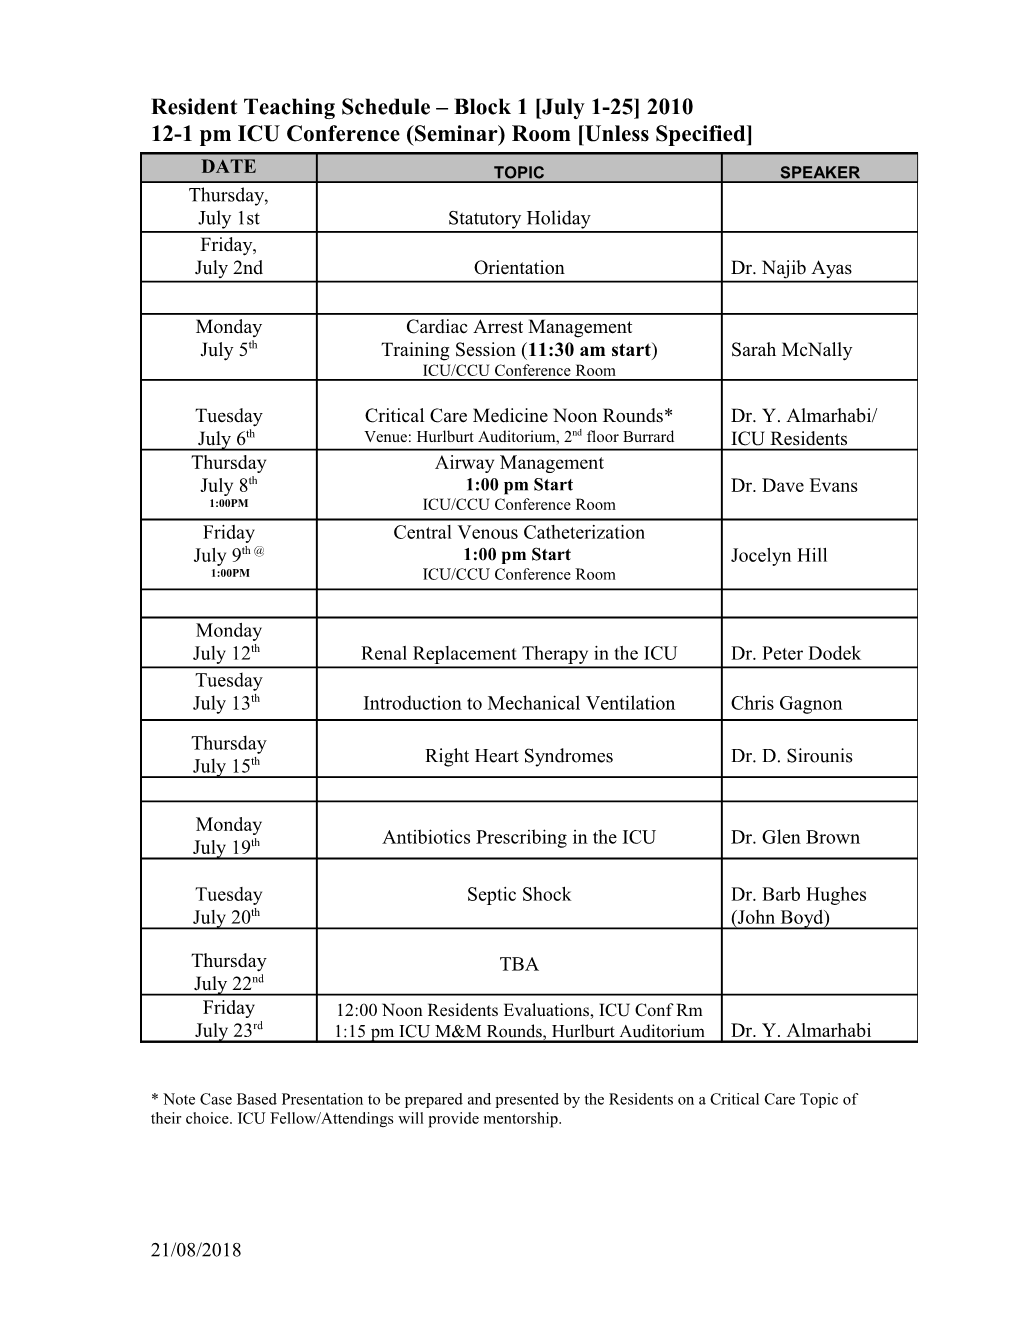 Resident Teaching Schedule Block 5 Oct 19-Nov 15 2009